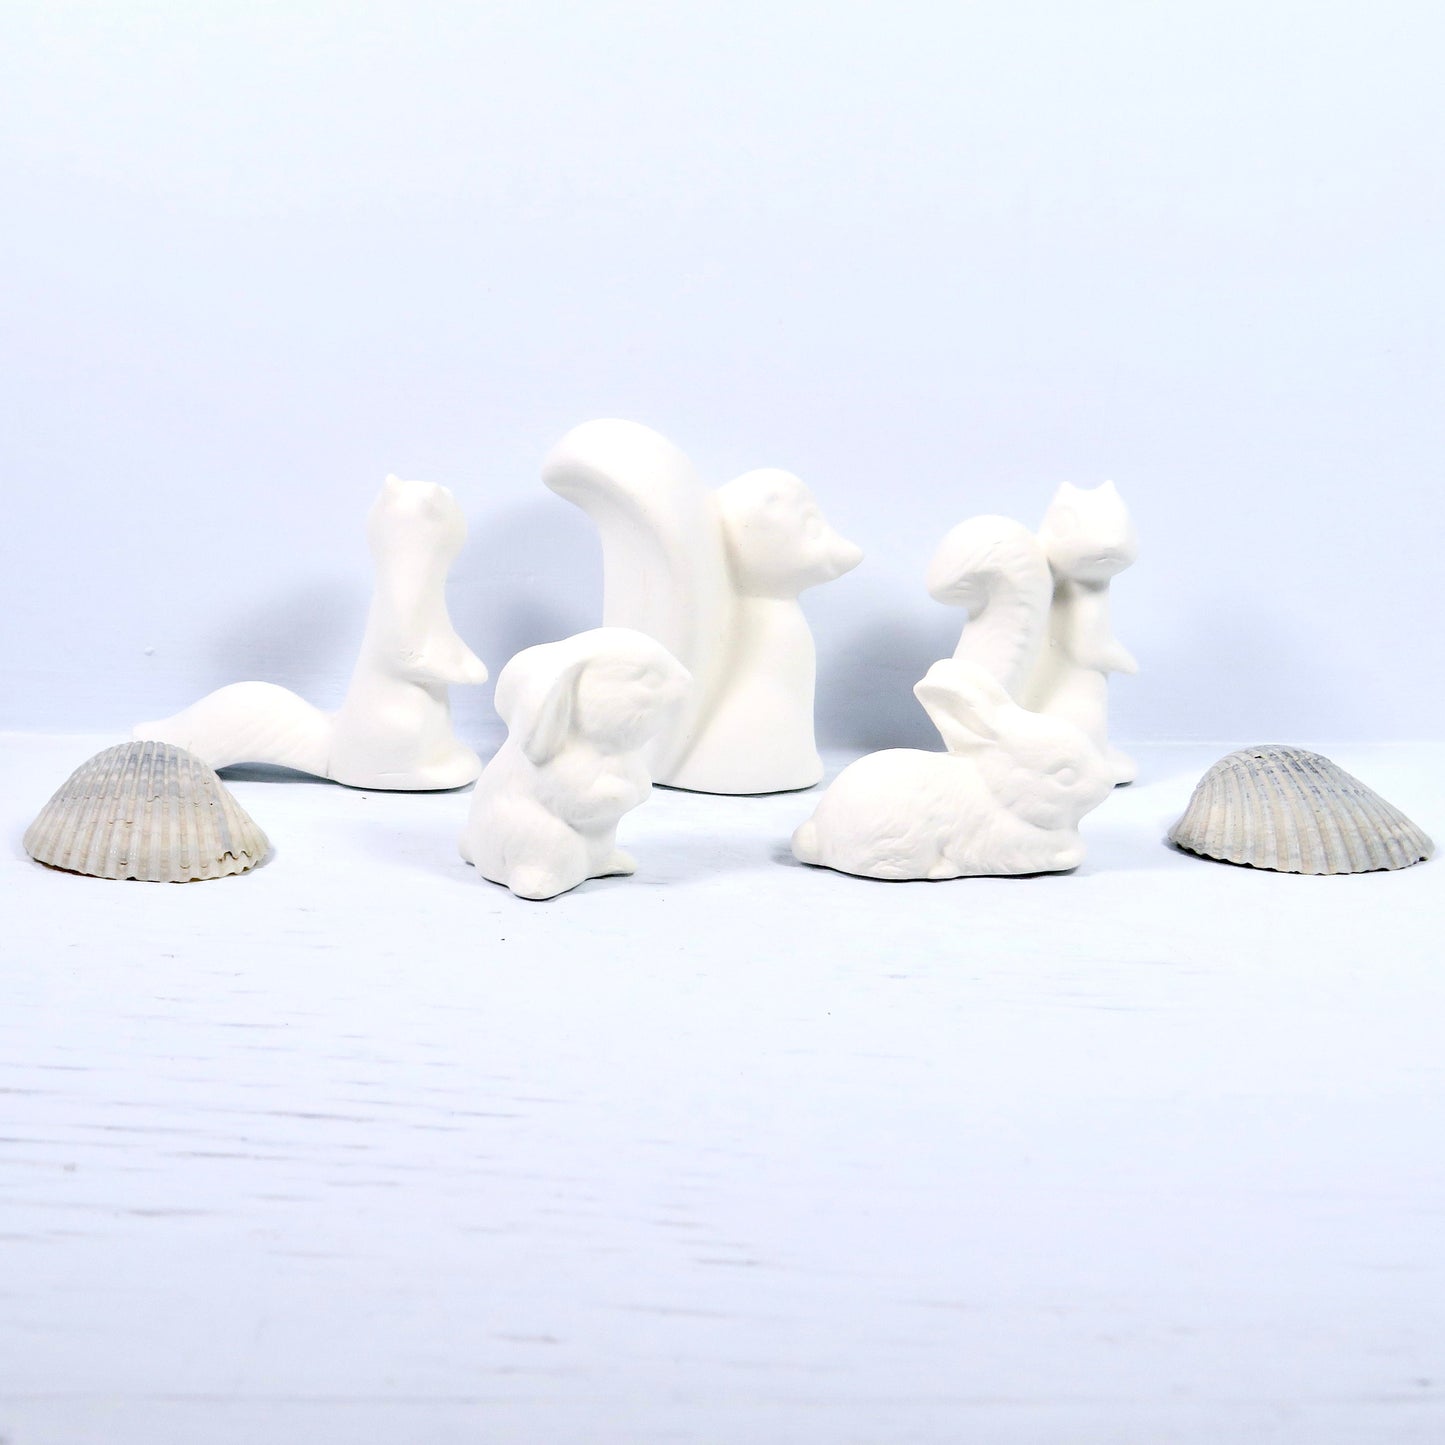 Small Woodland Ceramic Bisque Animals / Unpainted Ceramics / Ready to Paint / Squirrel Figurines / Skunk Figurine / Bunny Figurines